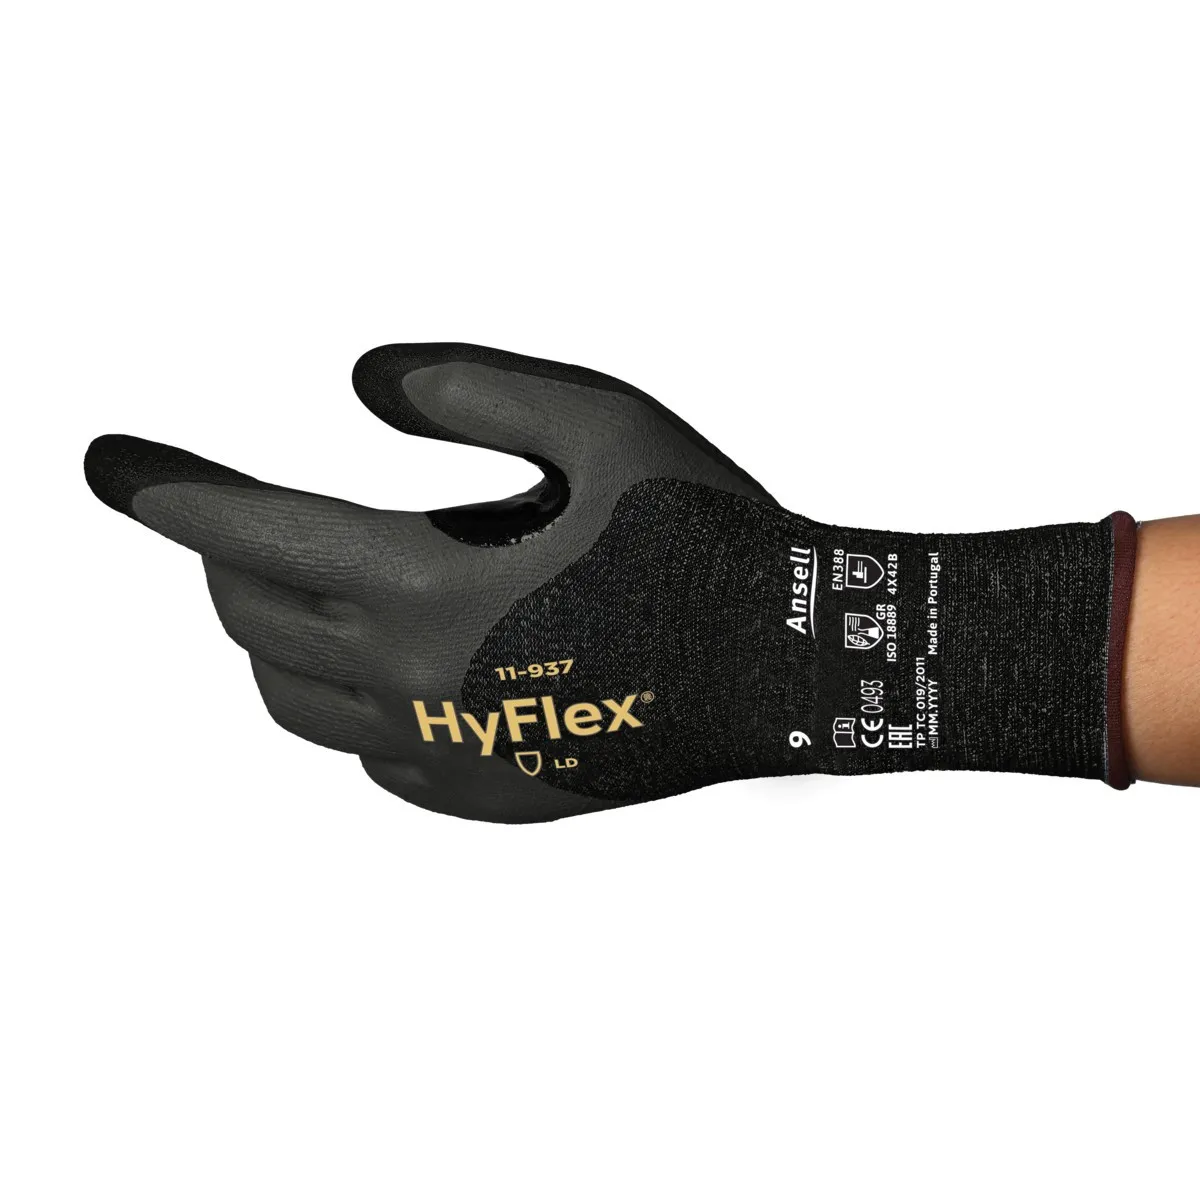 Zaštitne rukavice HYFLEX 11-937 crne - Ansell - PAR 